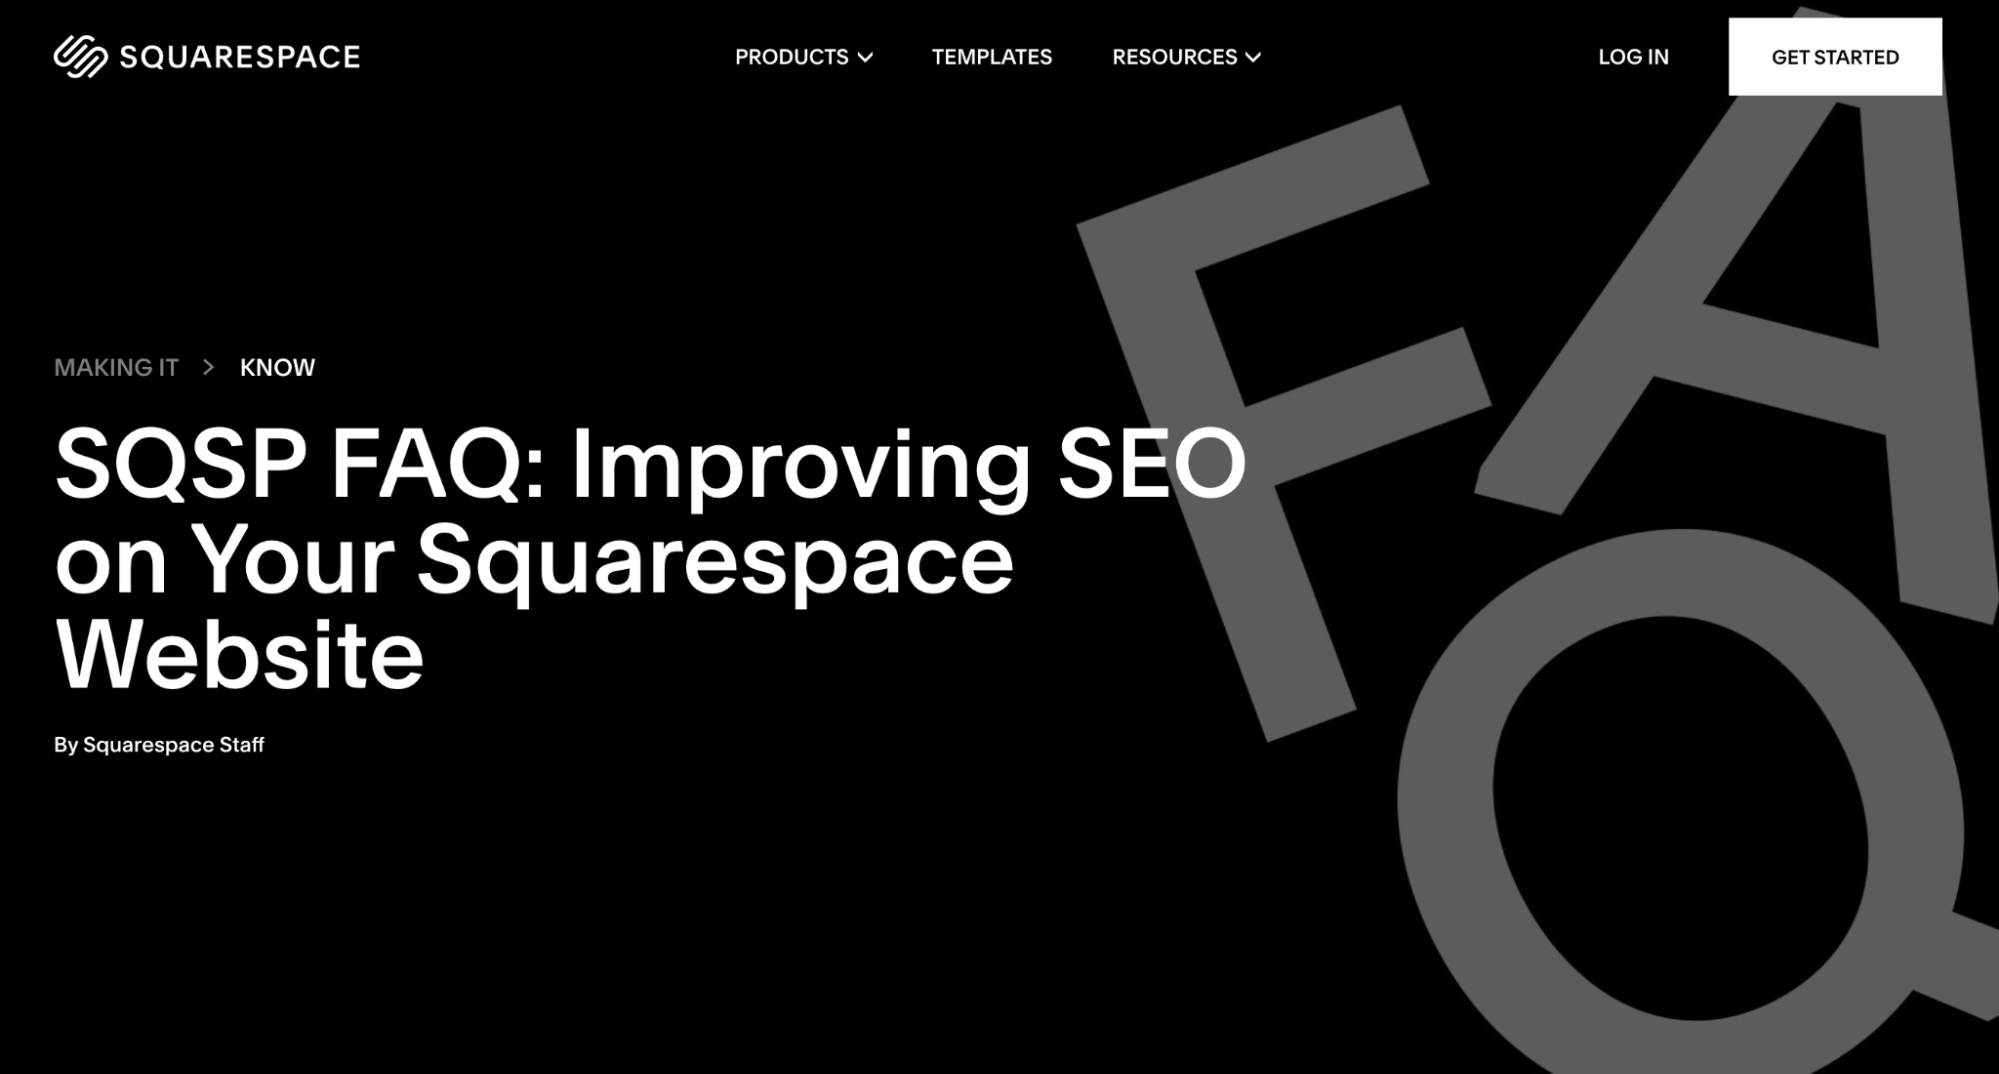 Squarespace "Improving SEO" landing page